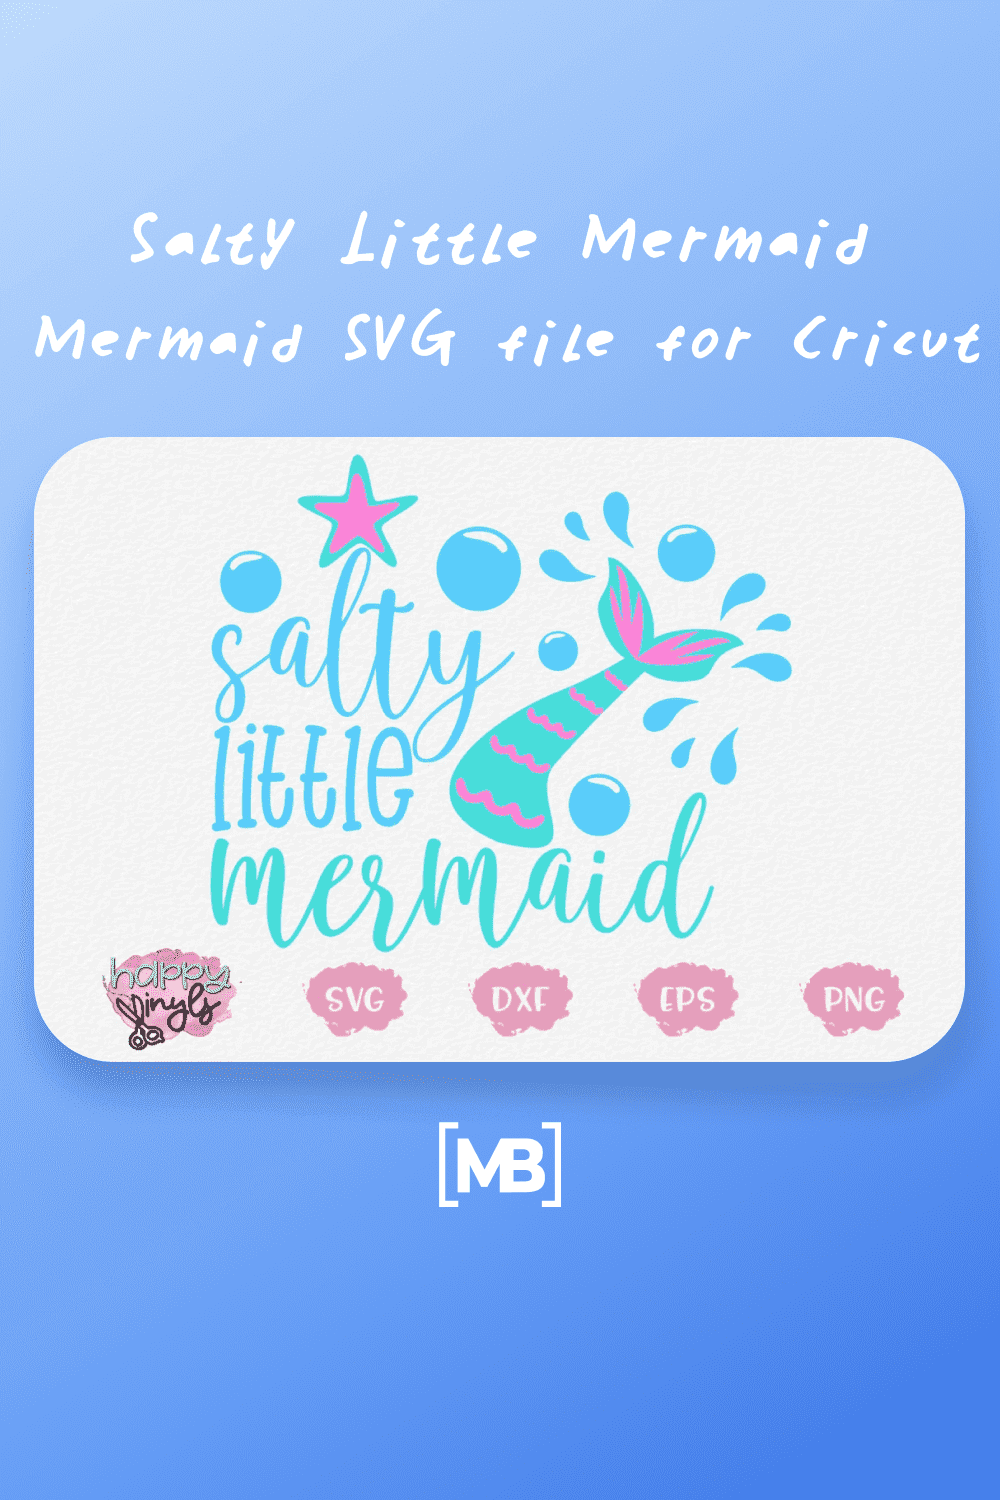 Salty Little Mermaid - A Mermaid SVG file for Cricut.